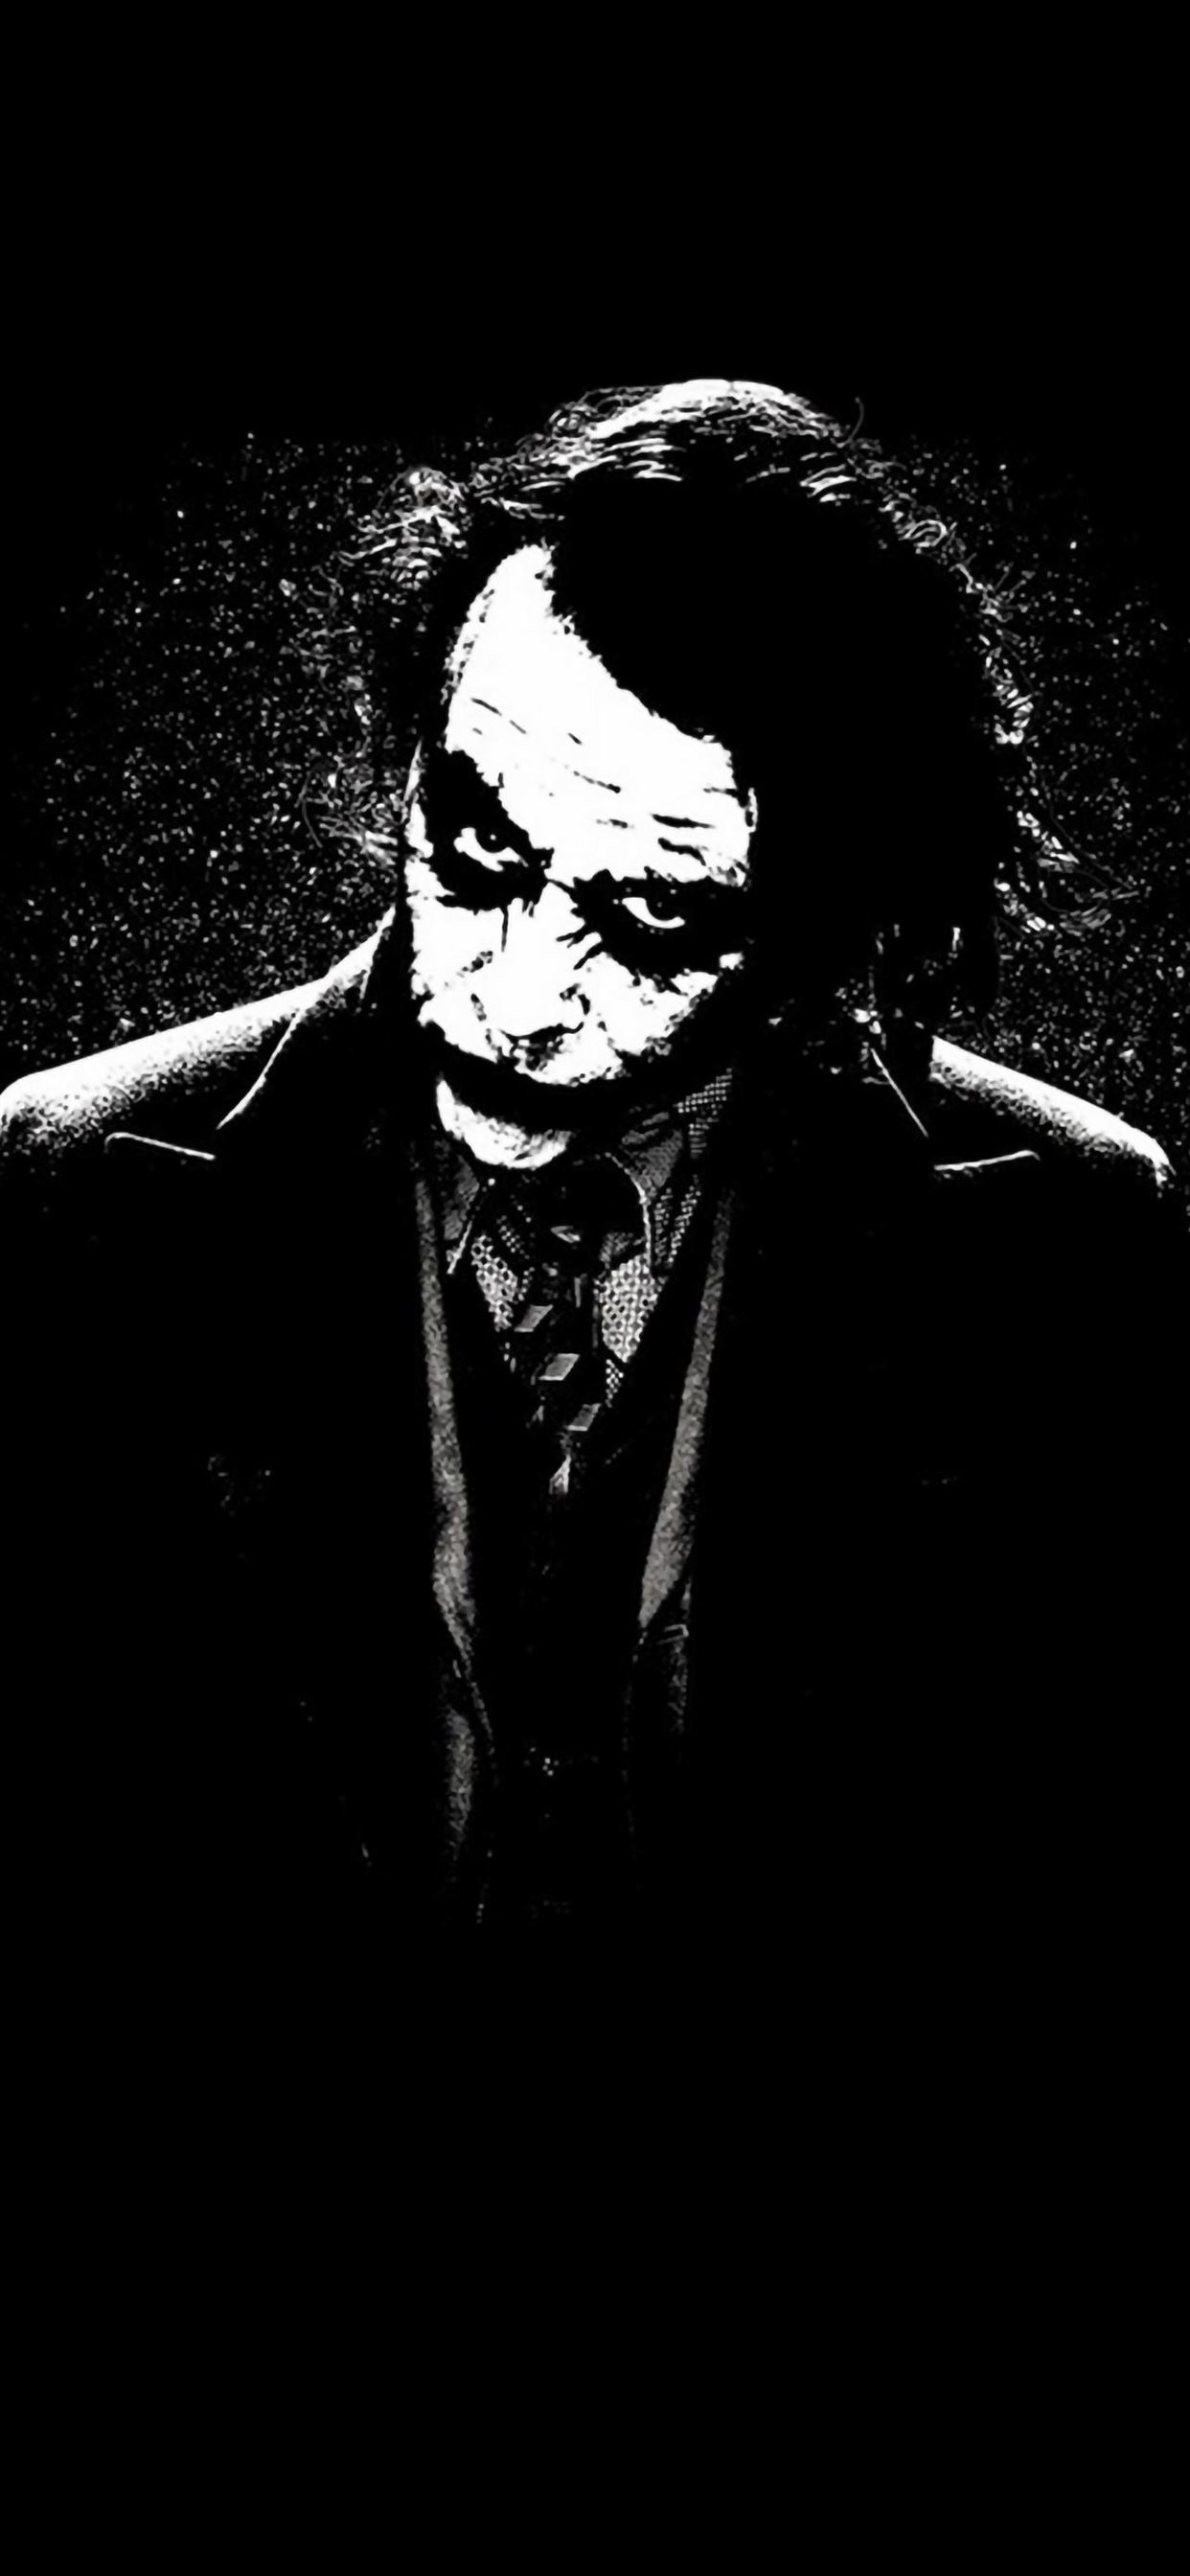 The Joker Batman Black White Painting Art iPhone Wallpapers Free Download